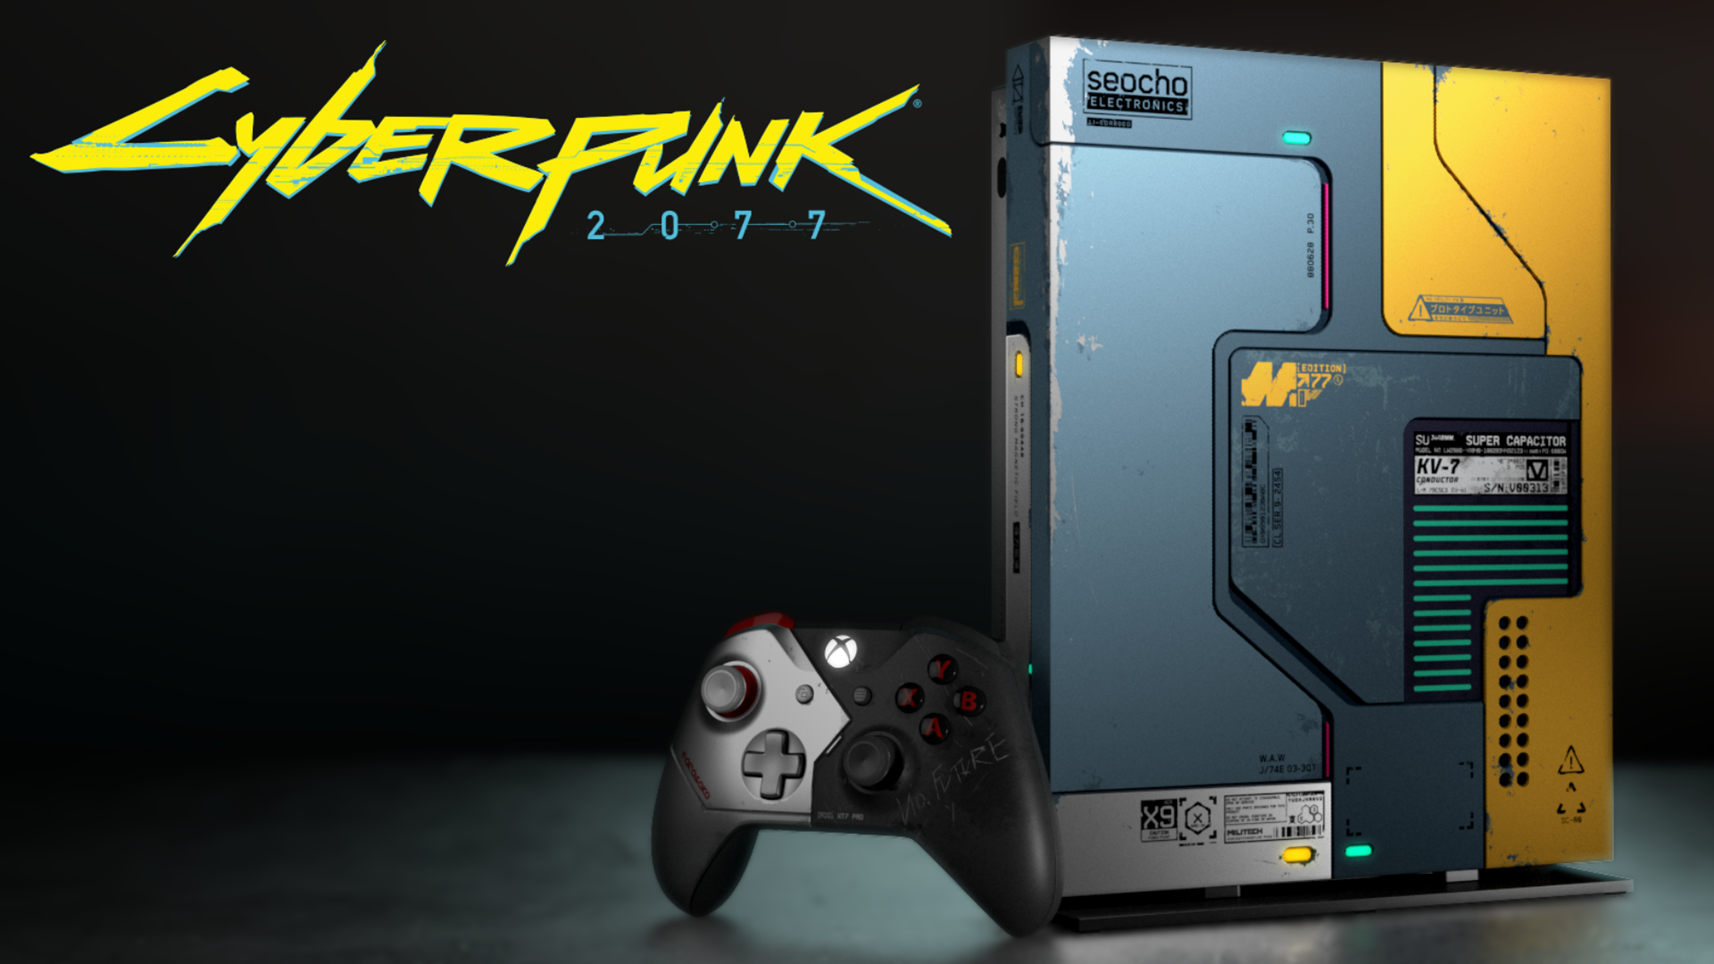 Cyberpunk 2077-inspired Xbox One X console